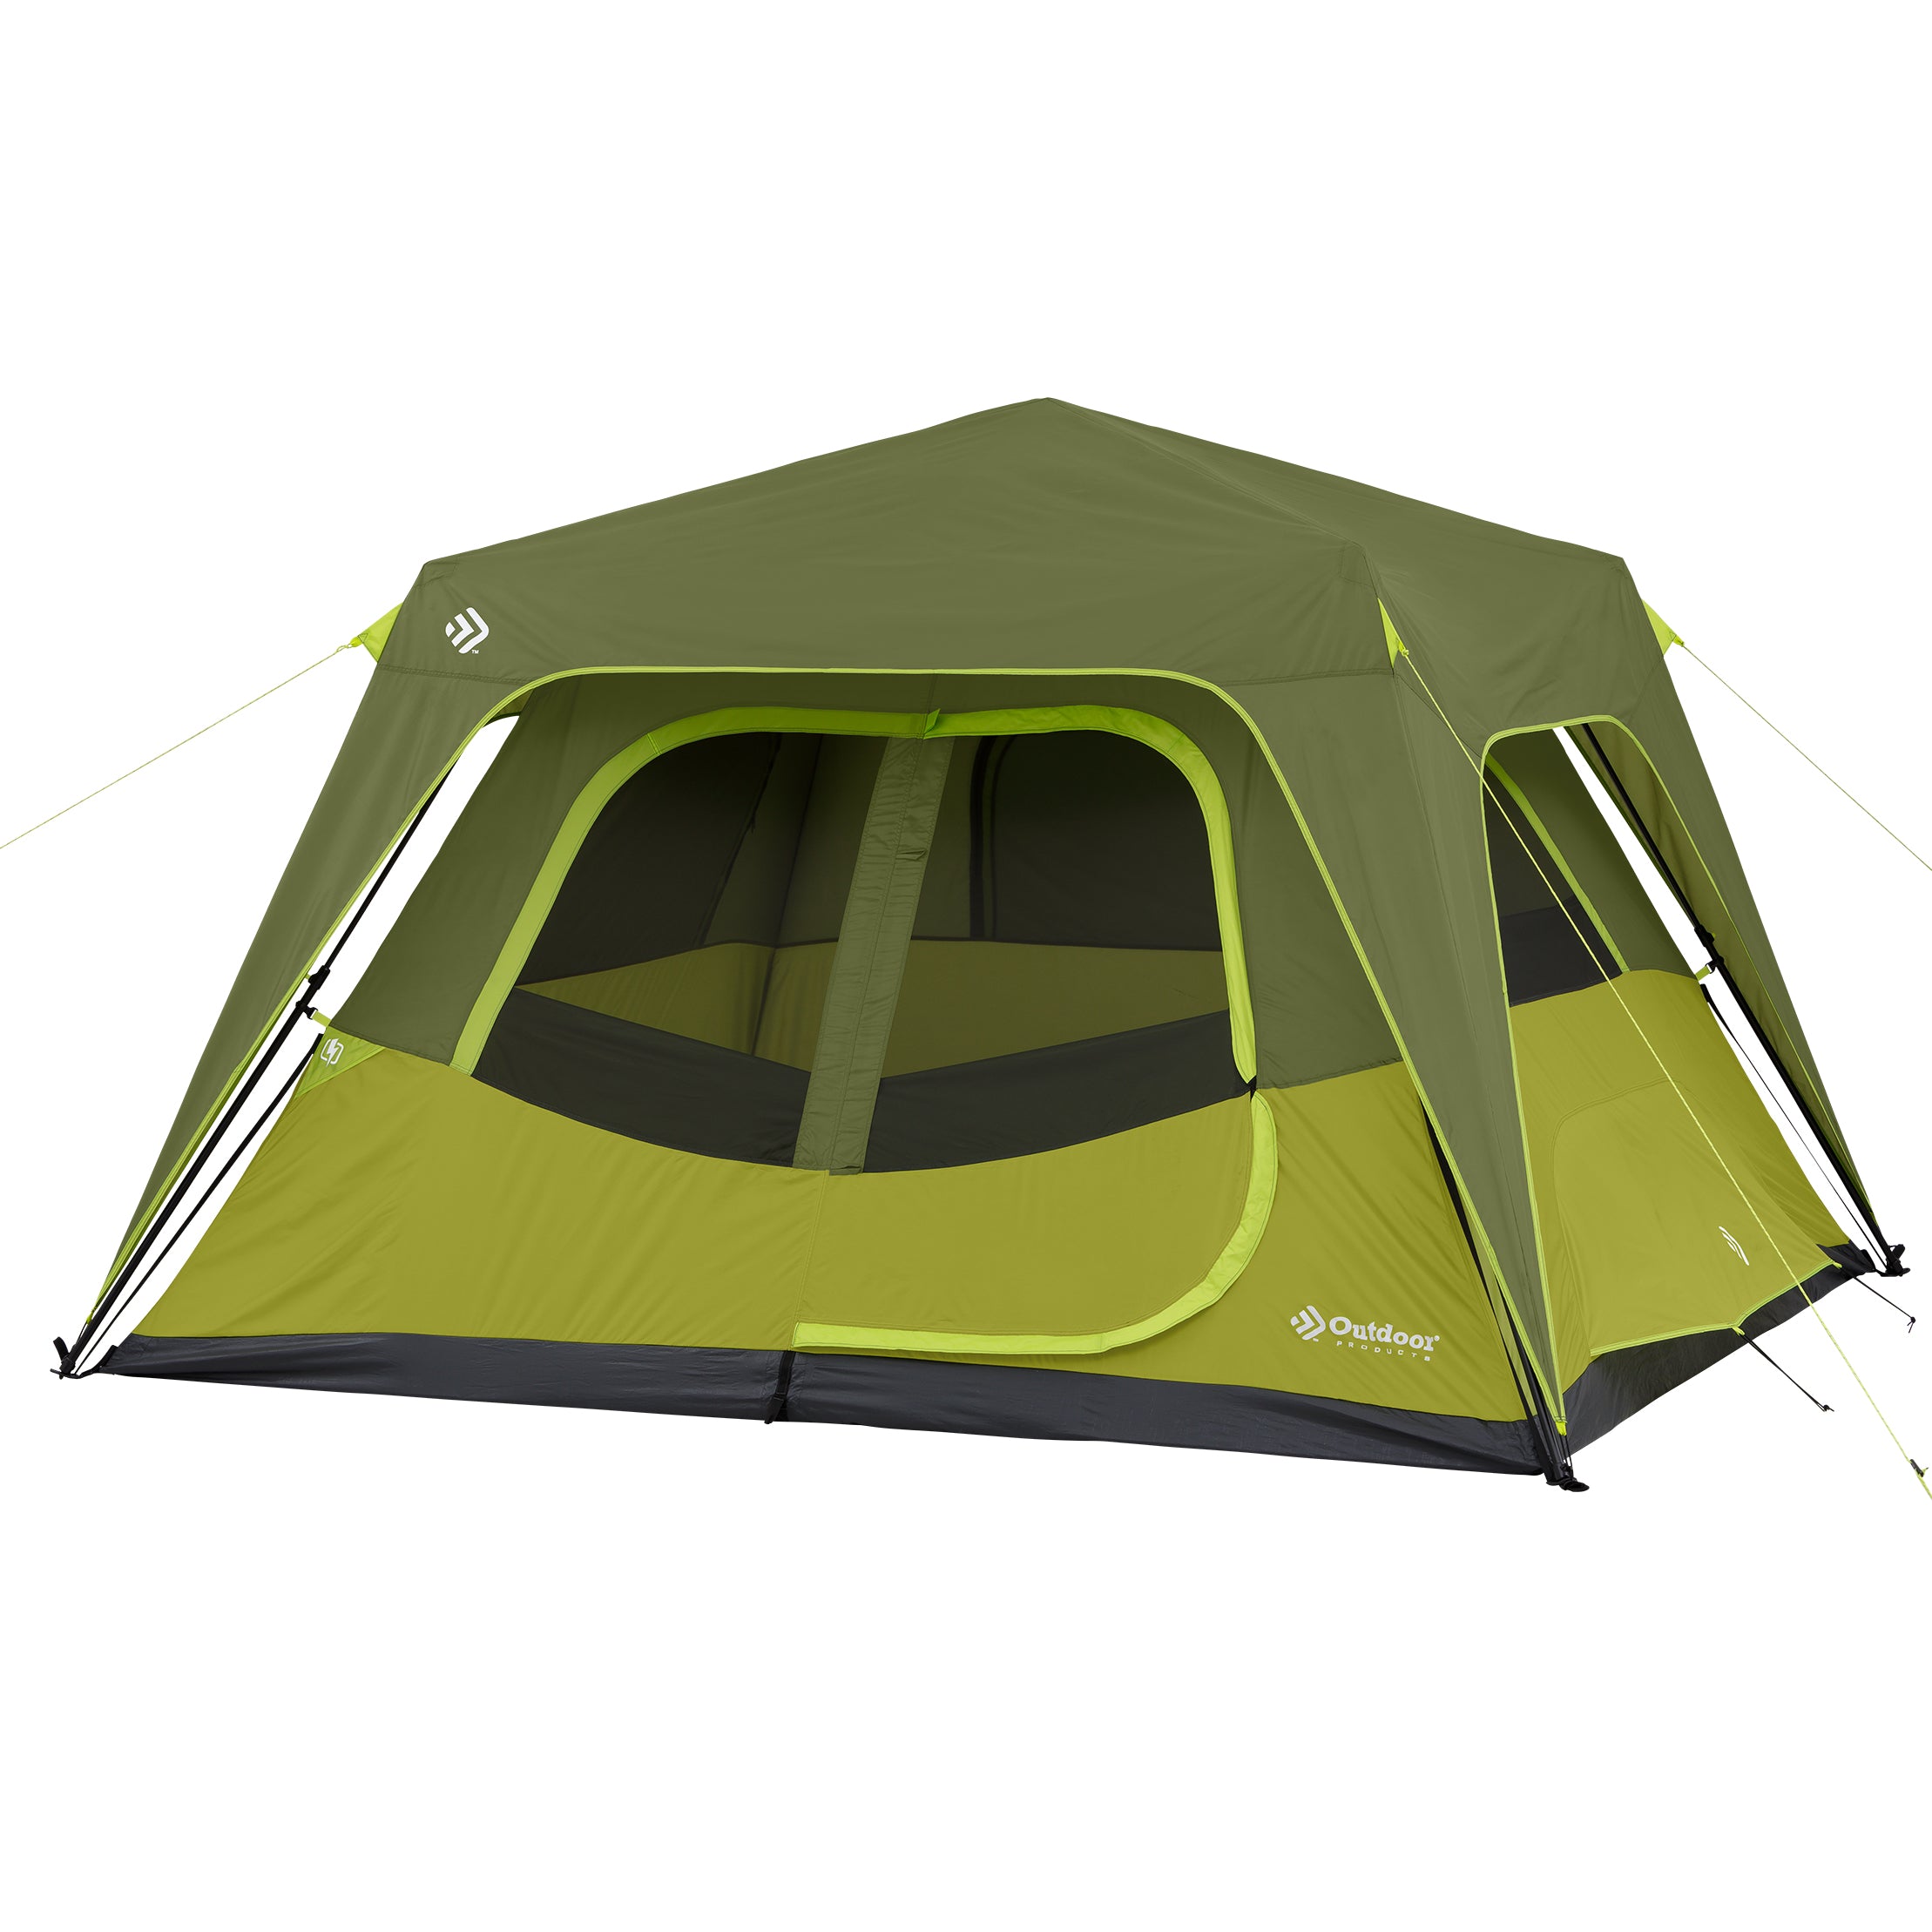 Diversen goochelaar kas 6 Person Instant Cabin Tent | Outdoor Products – Outdoor Products - Camping